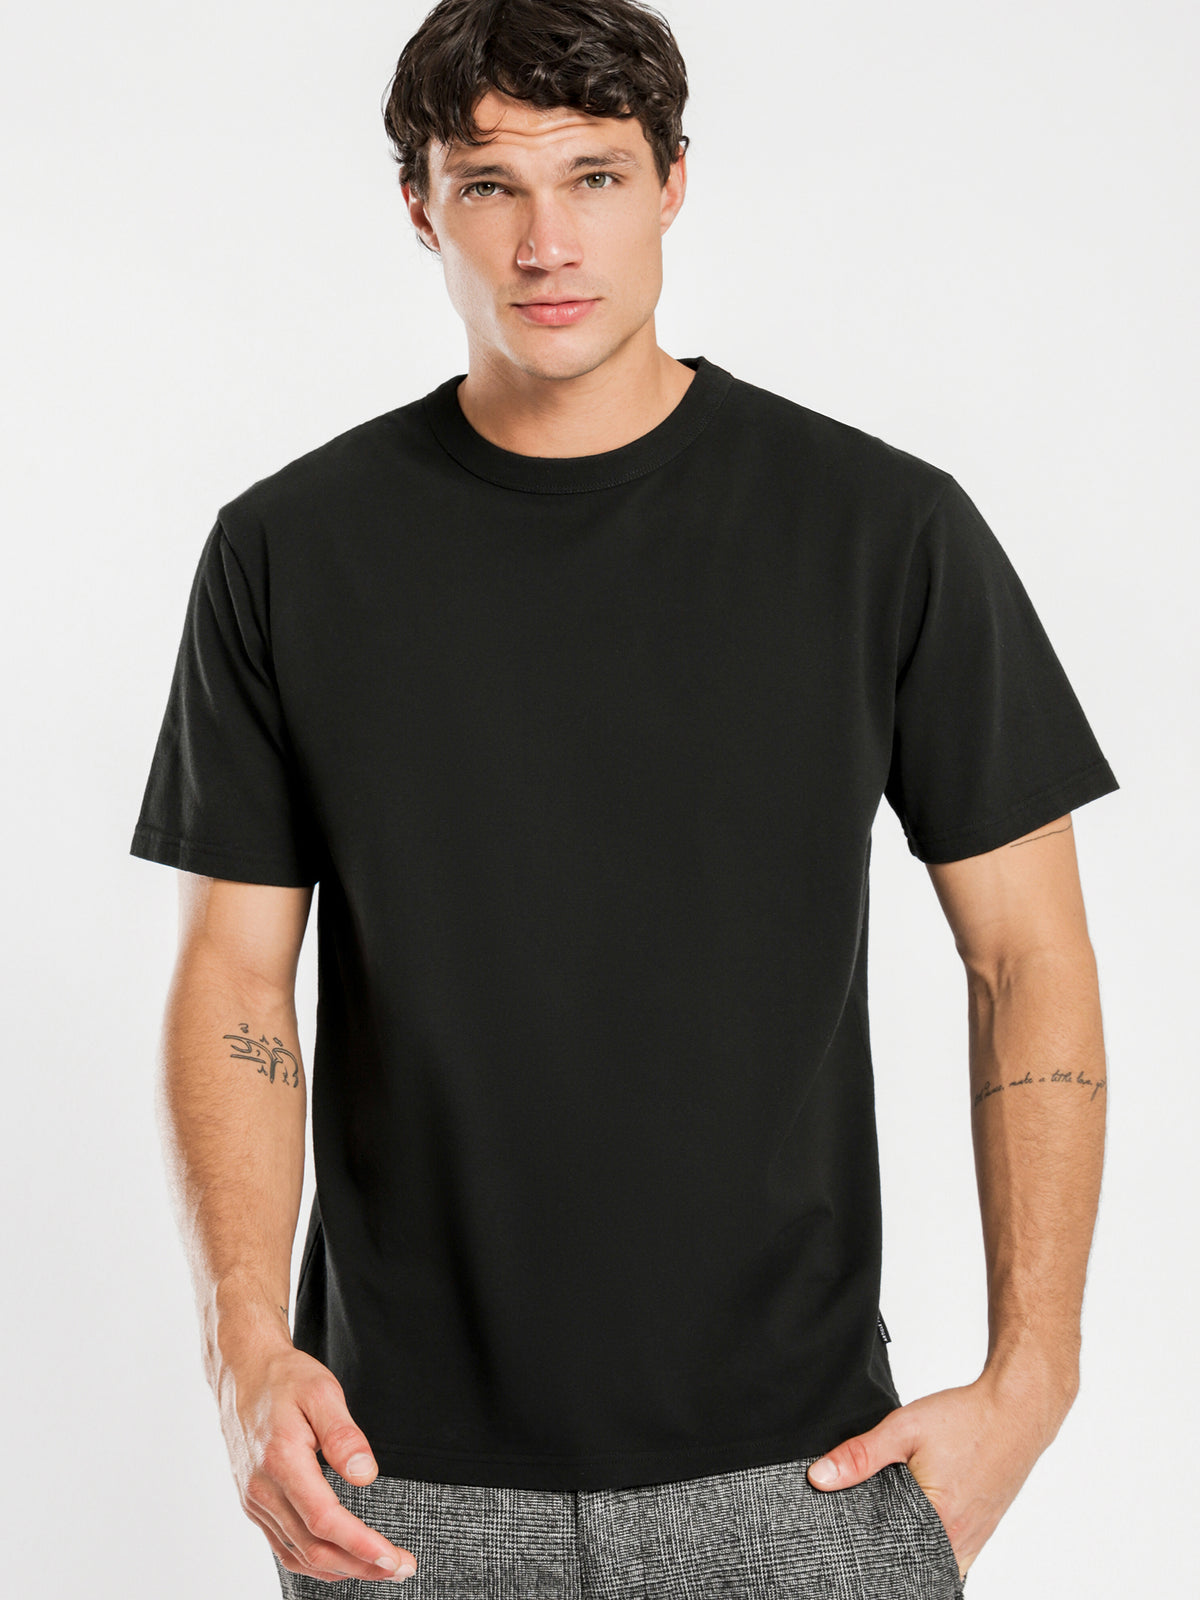 Heavyweight Short Sleeve Crew T-Shirt in Black